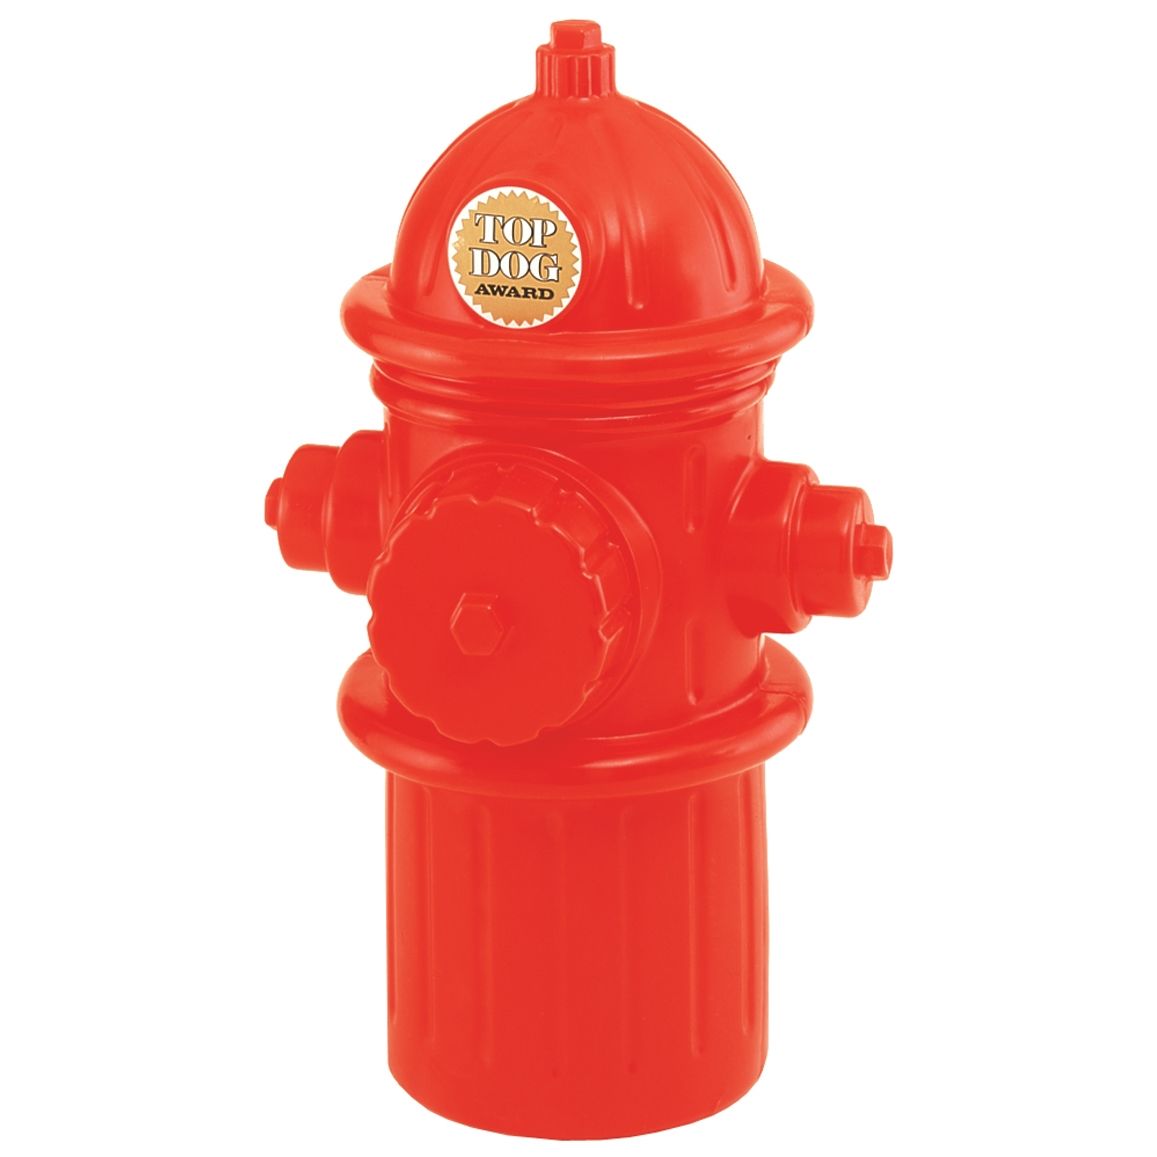 Hueter Toledo Dd-1600 Fireplug Storage Container